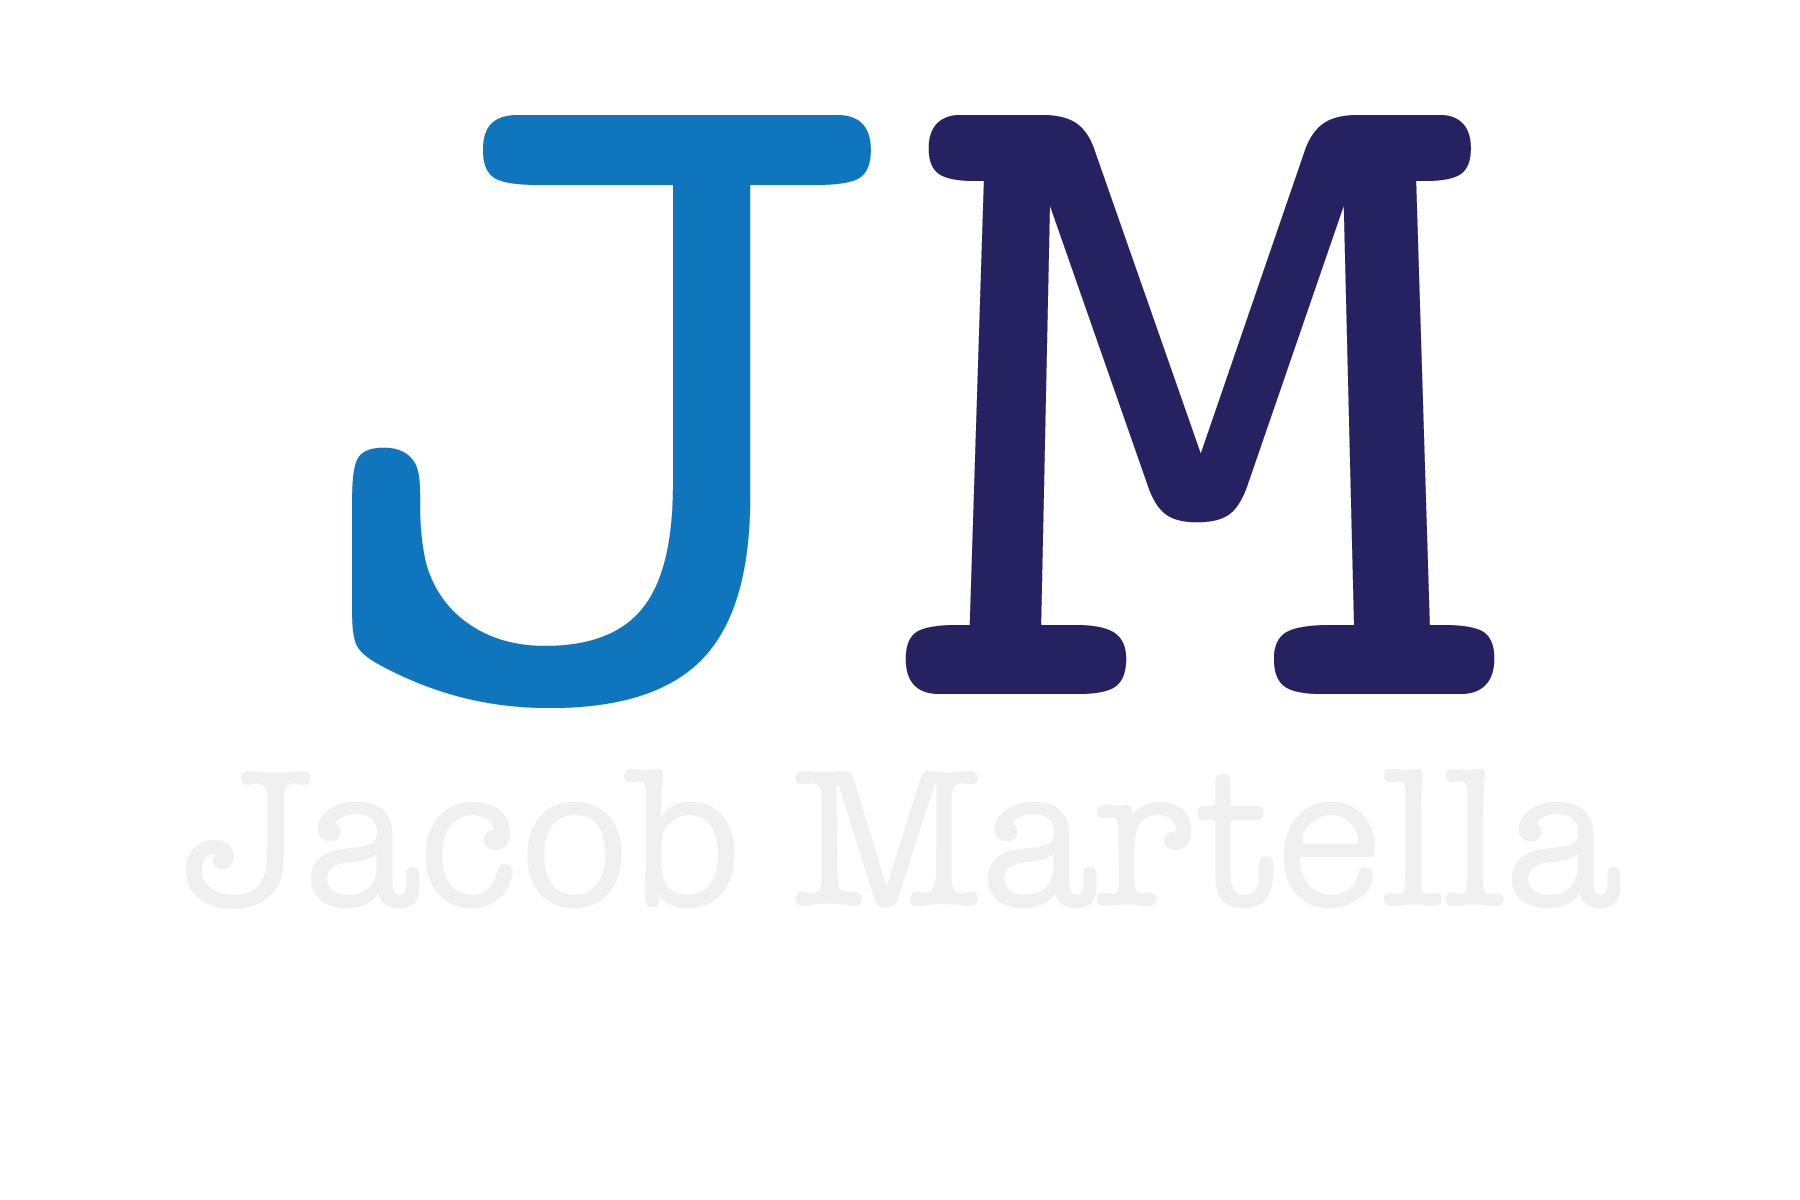 Jacob Martella Web Development logo with white bottom text